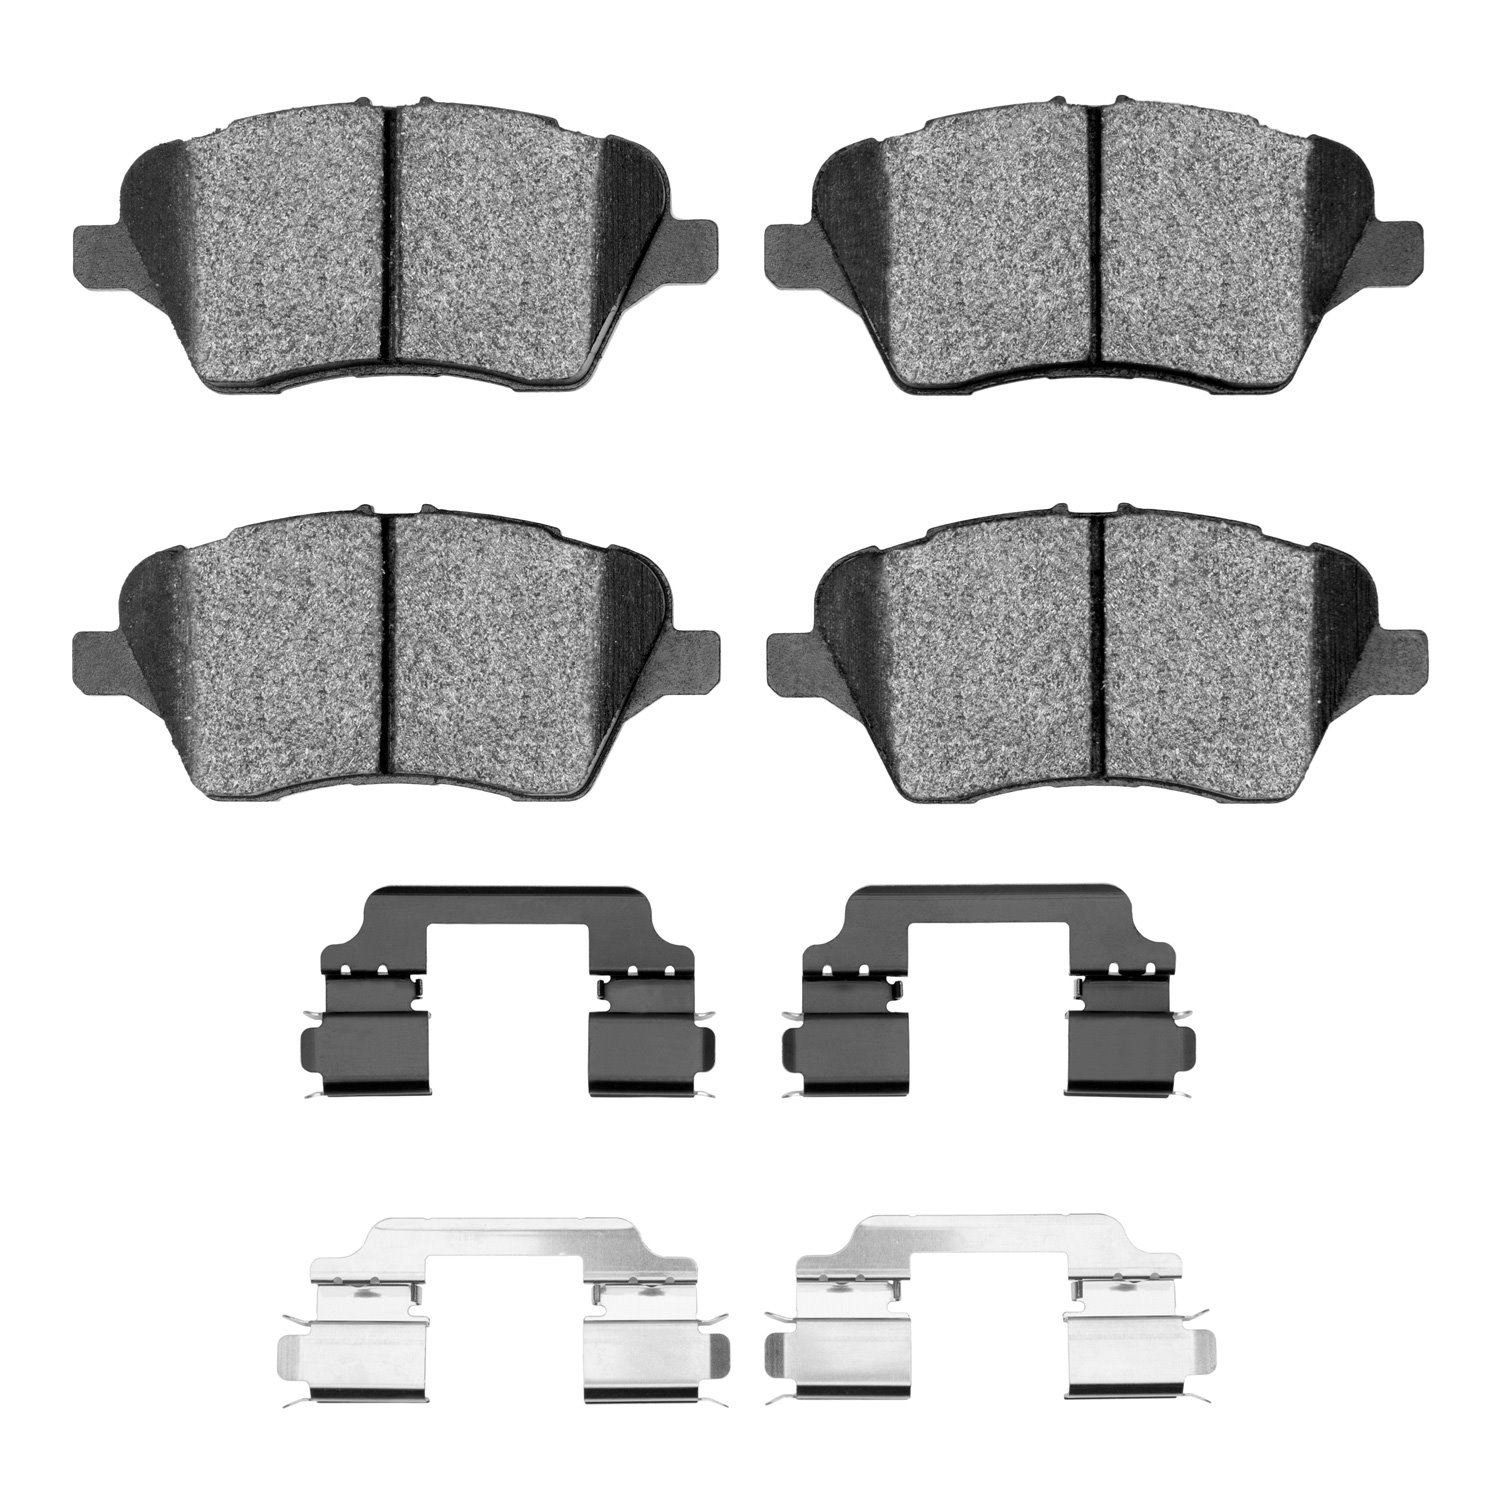 1310-1730-01 3000-Series Ceramic Brake Pads & Hardware Kit, 2014-2019 Ford/Lincoln/Mercury/Mazda, Position: Front